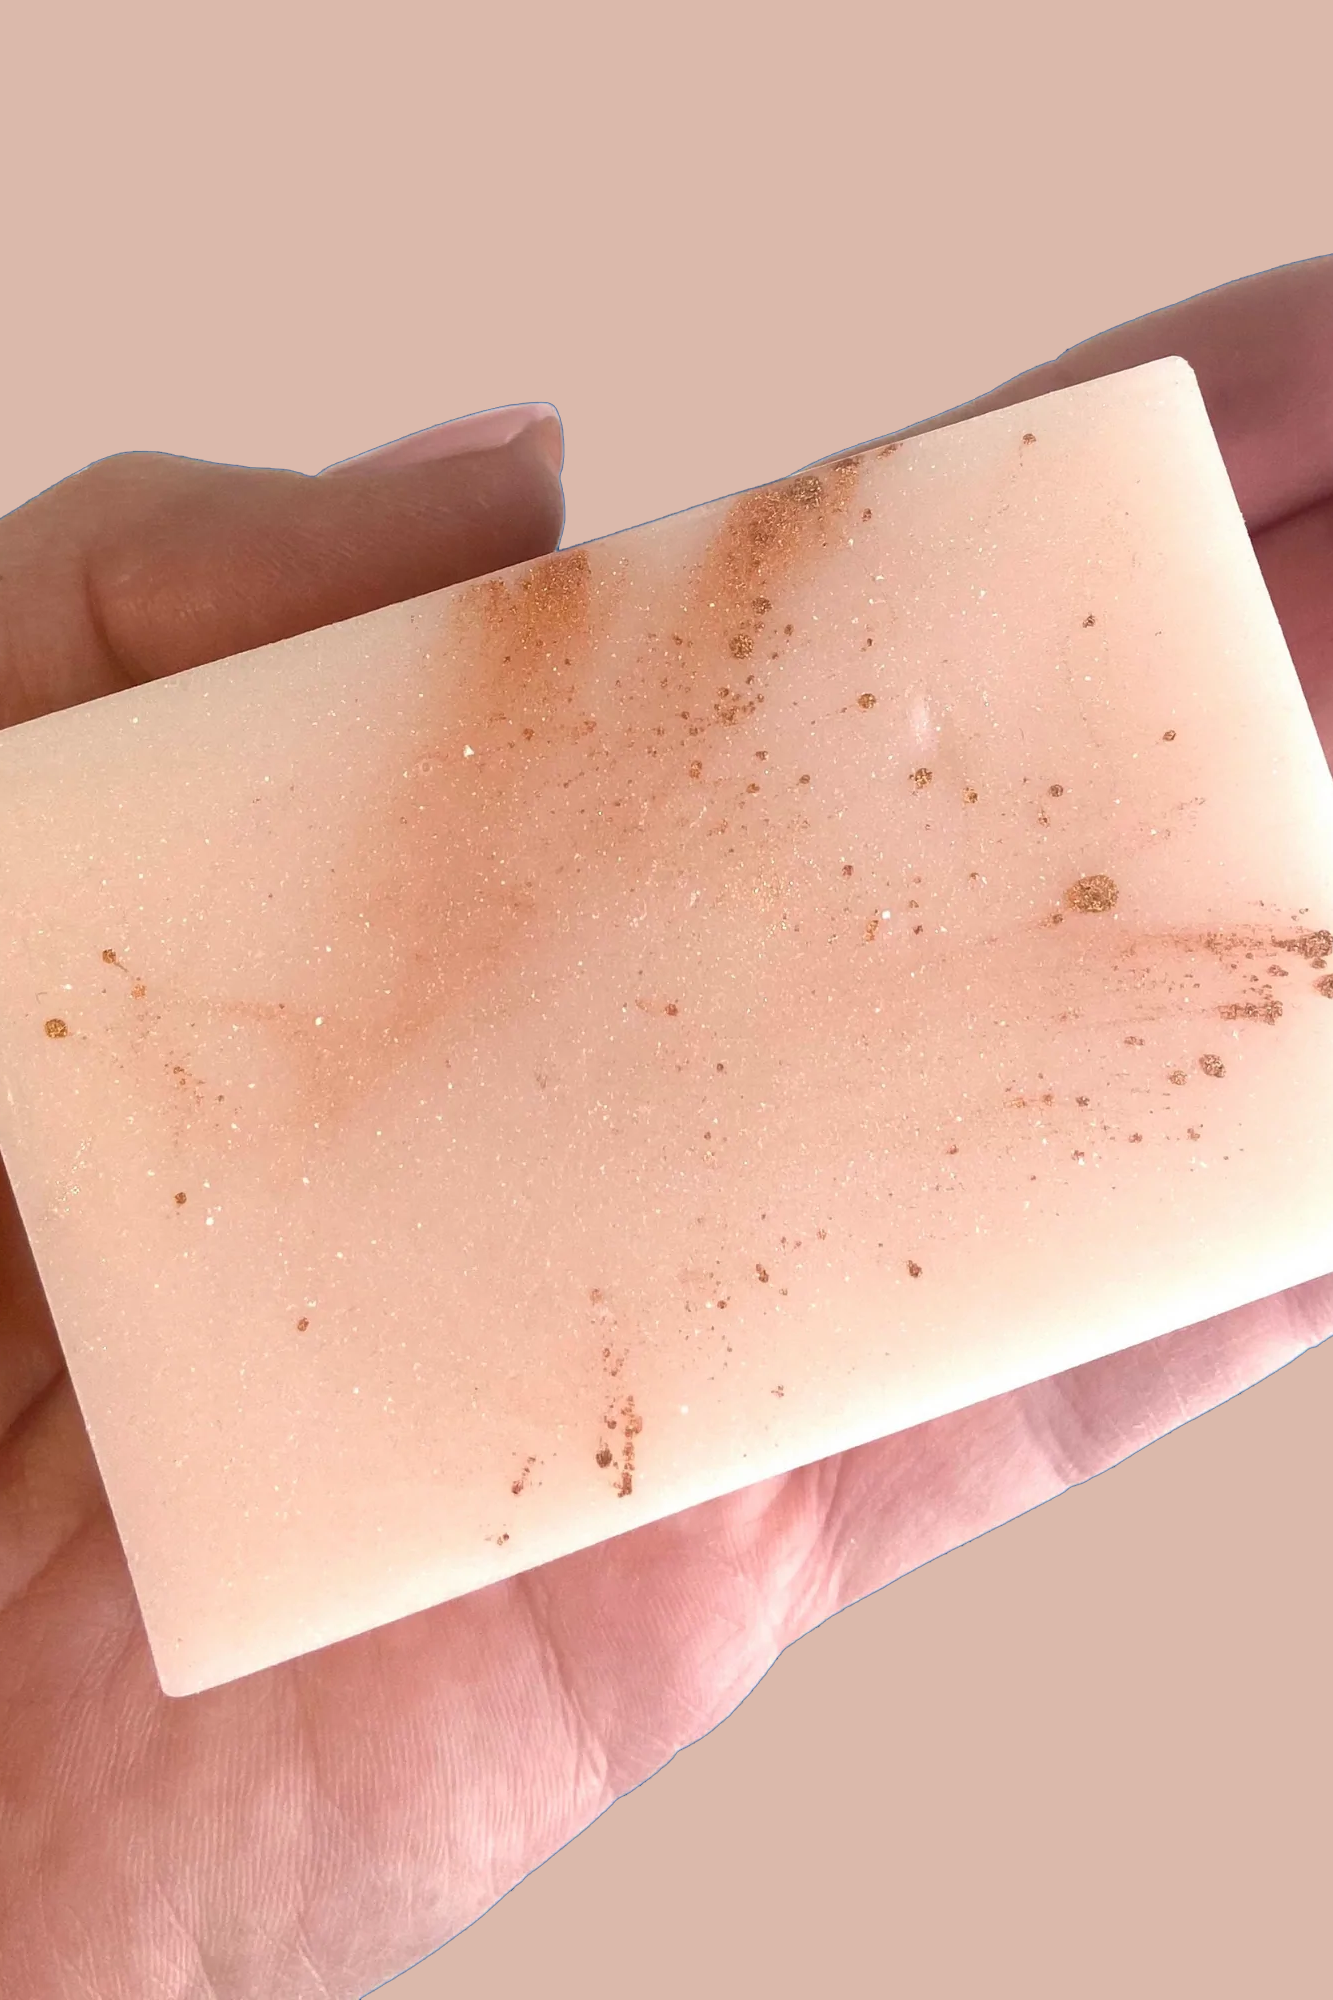 Apres Sea Shimmer Soap